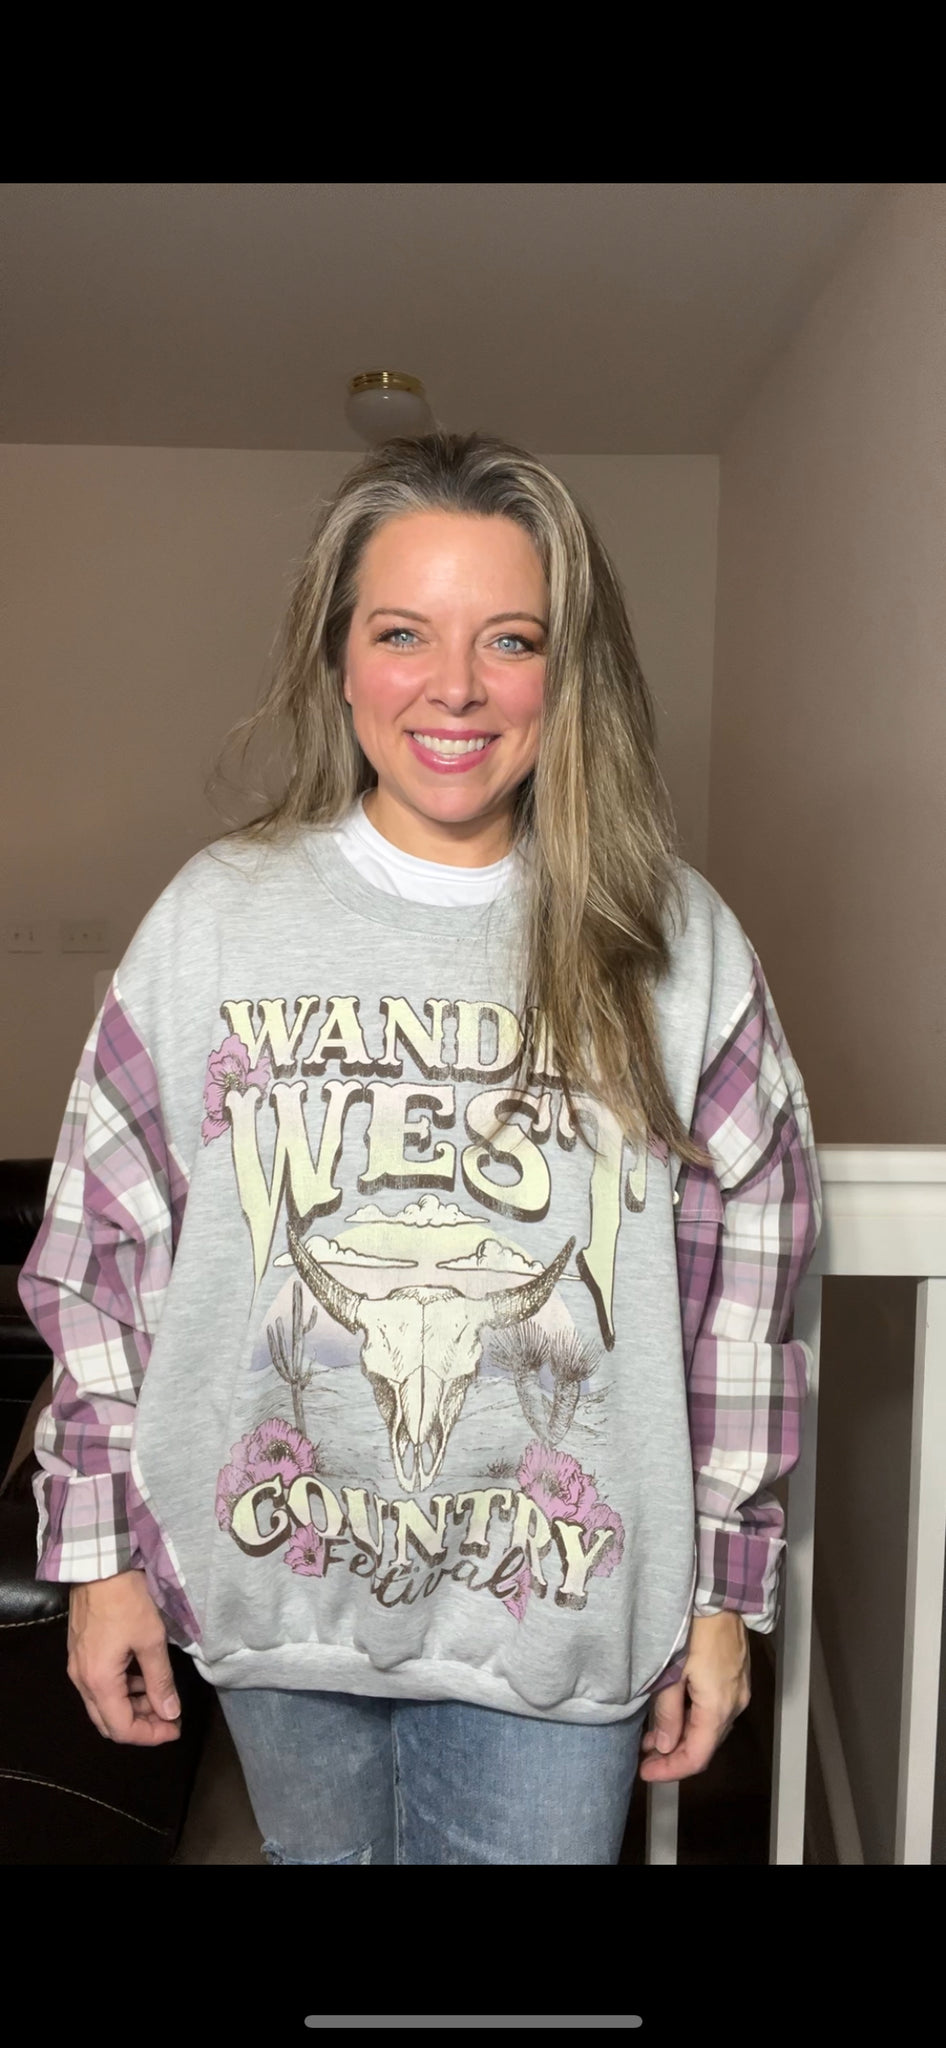 Wander West - woman’s XL/1X